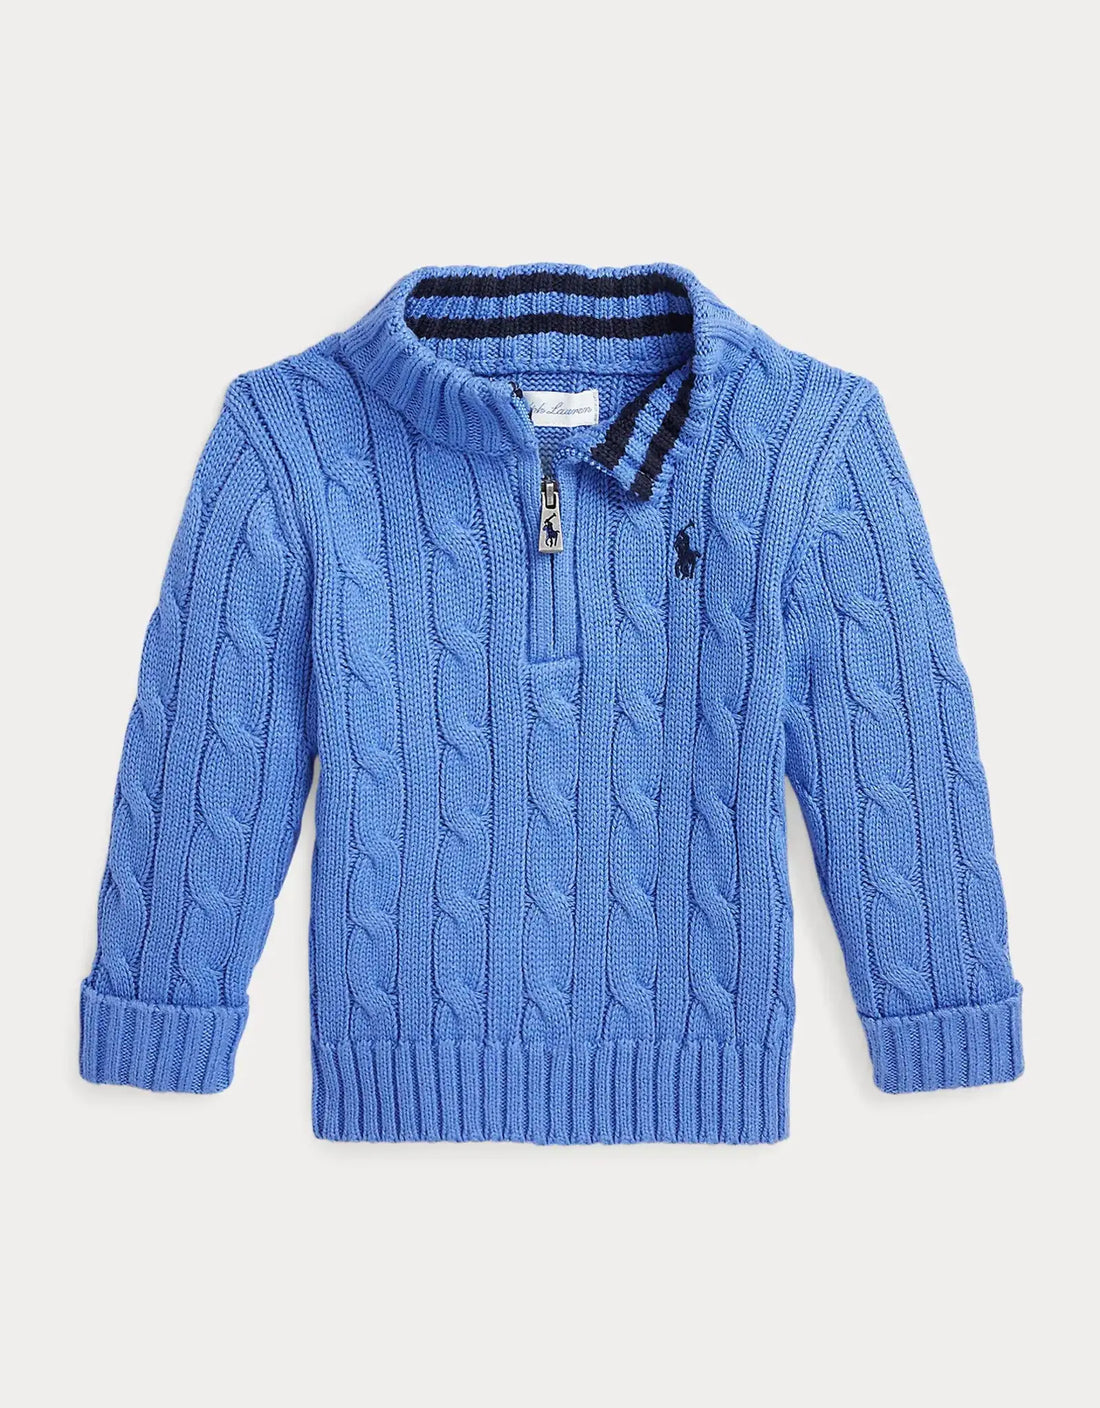 Sweater Cuello Alto Azul Bebé